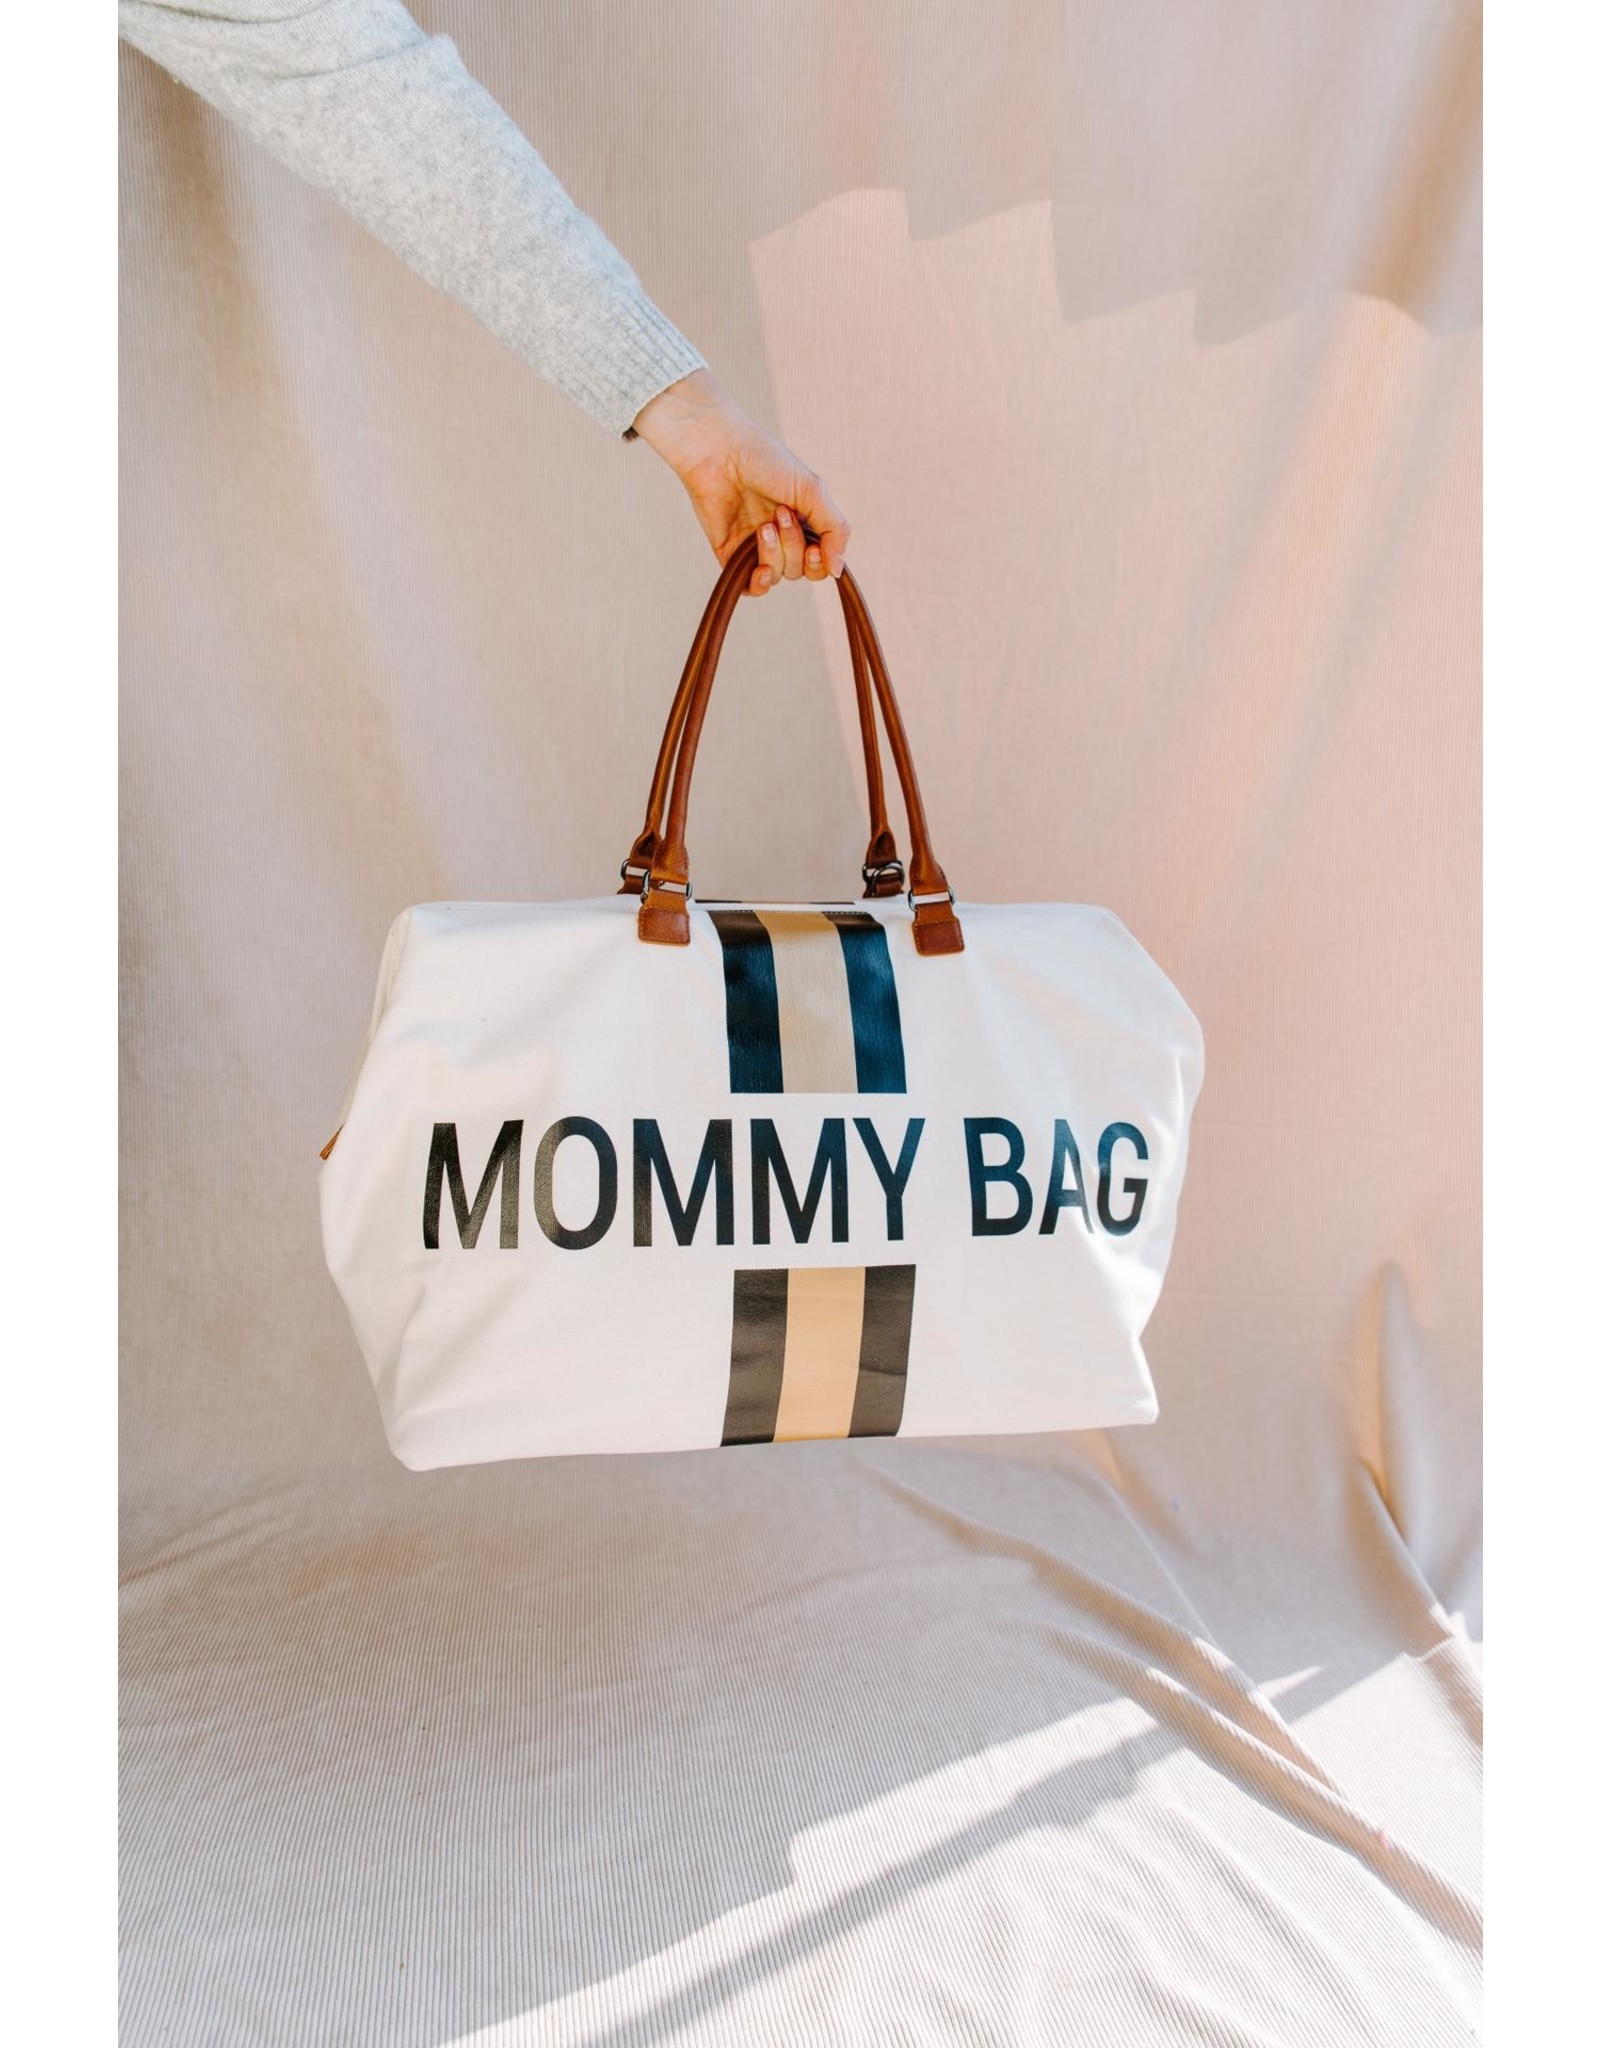 Mommy bag doré/noir - Souris Verte